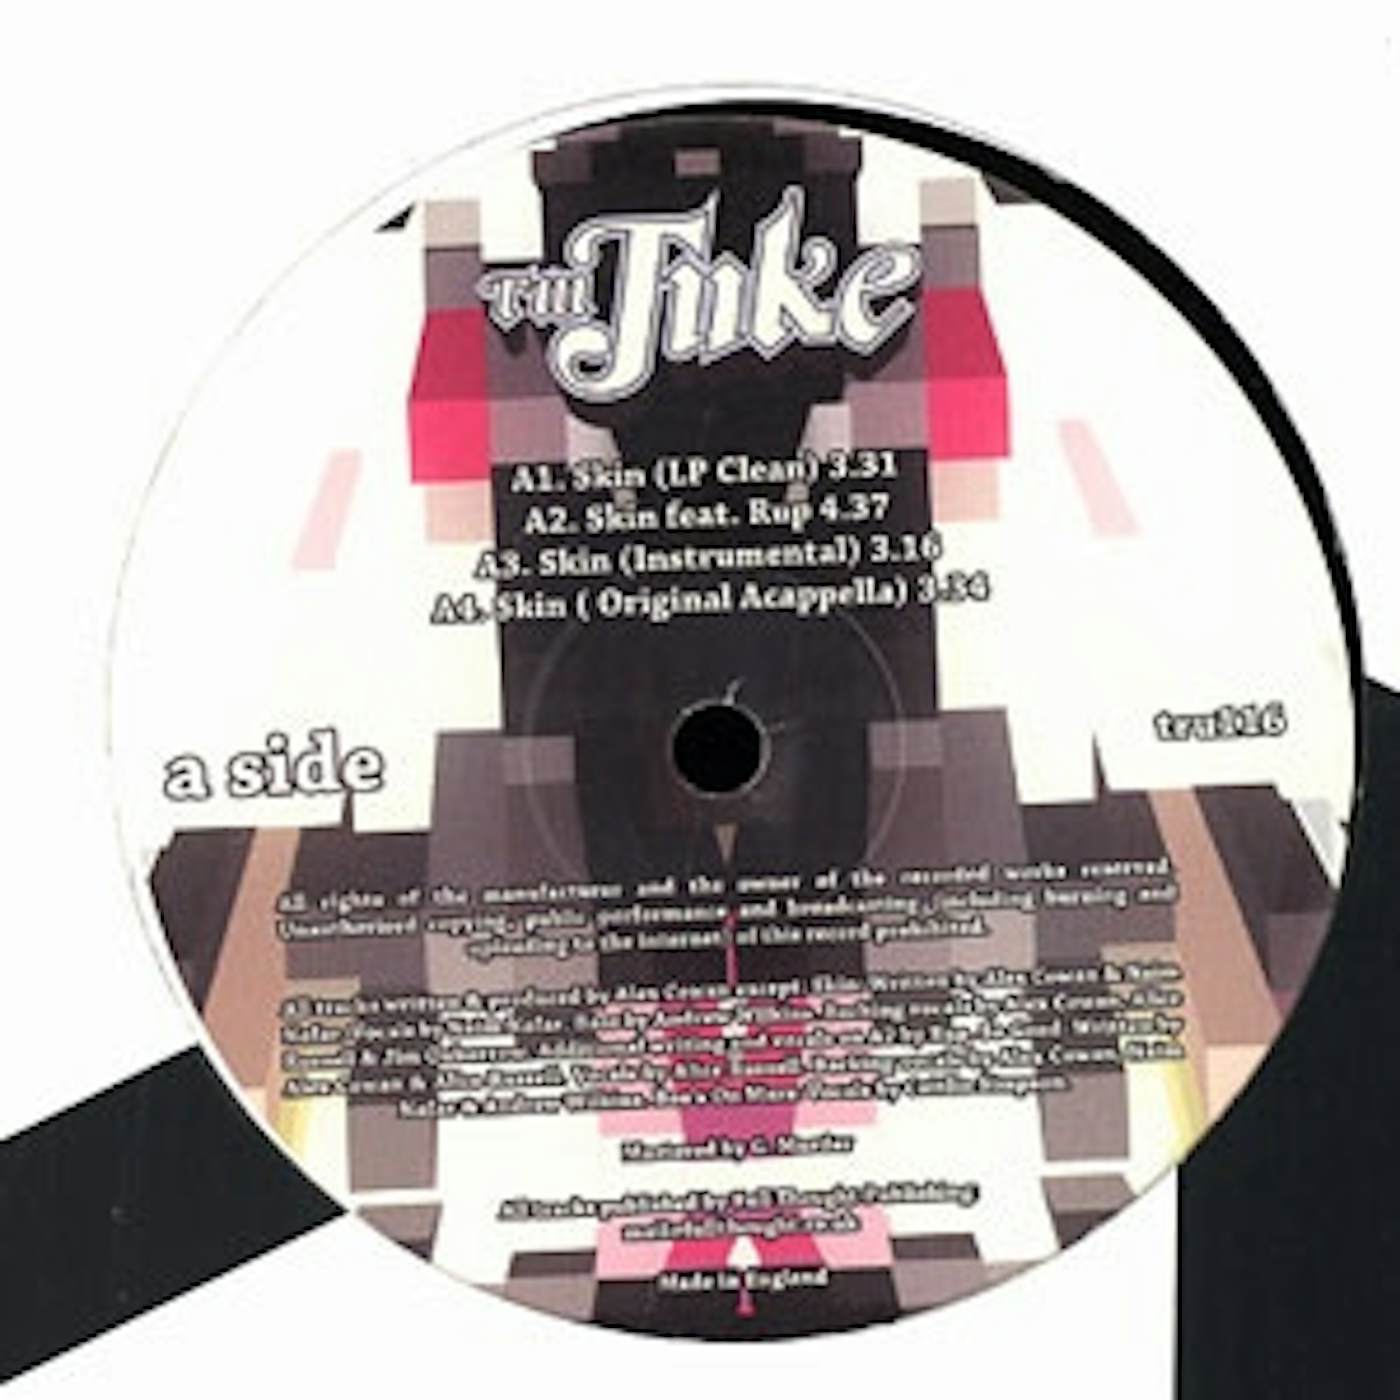 TM Juke SKIN Vinyl Record